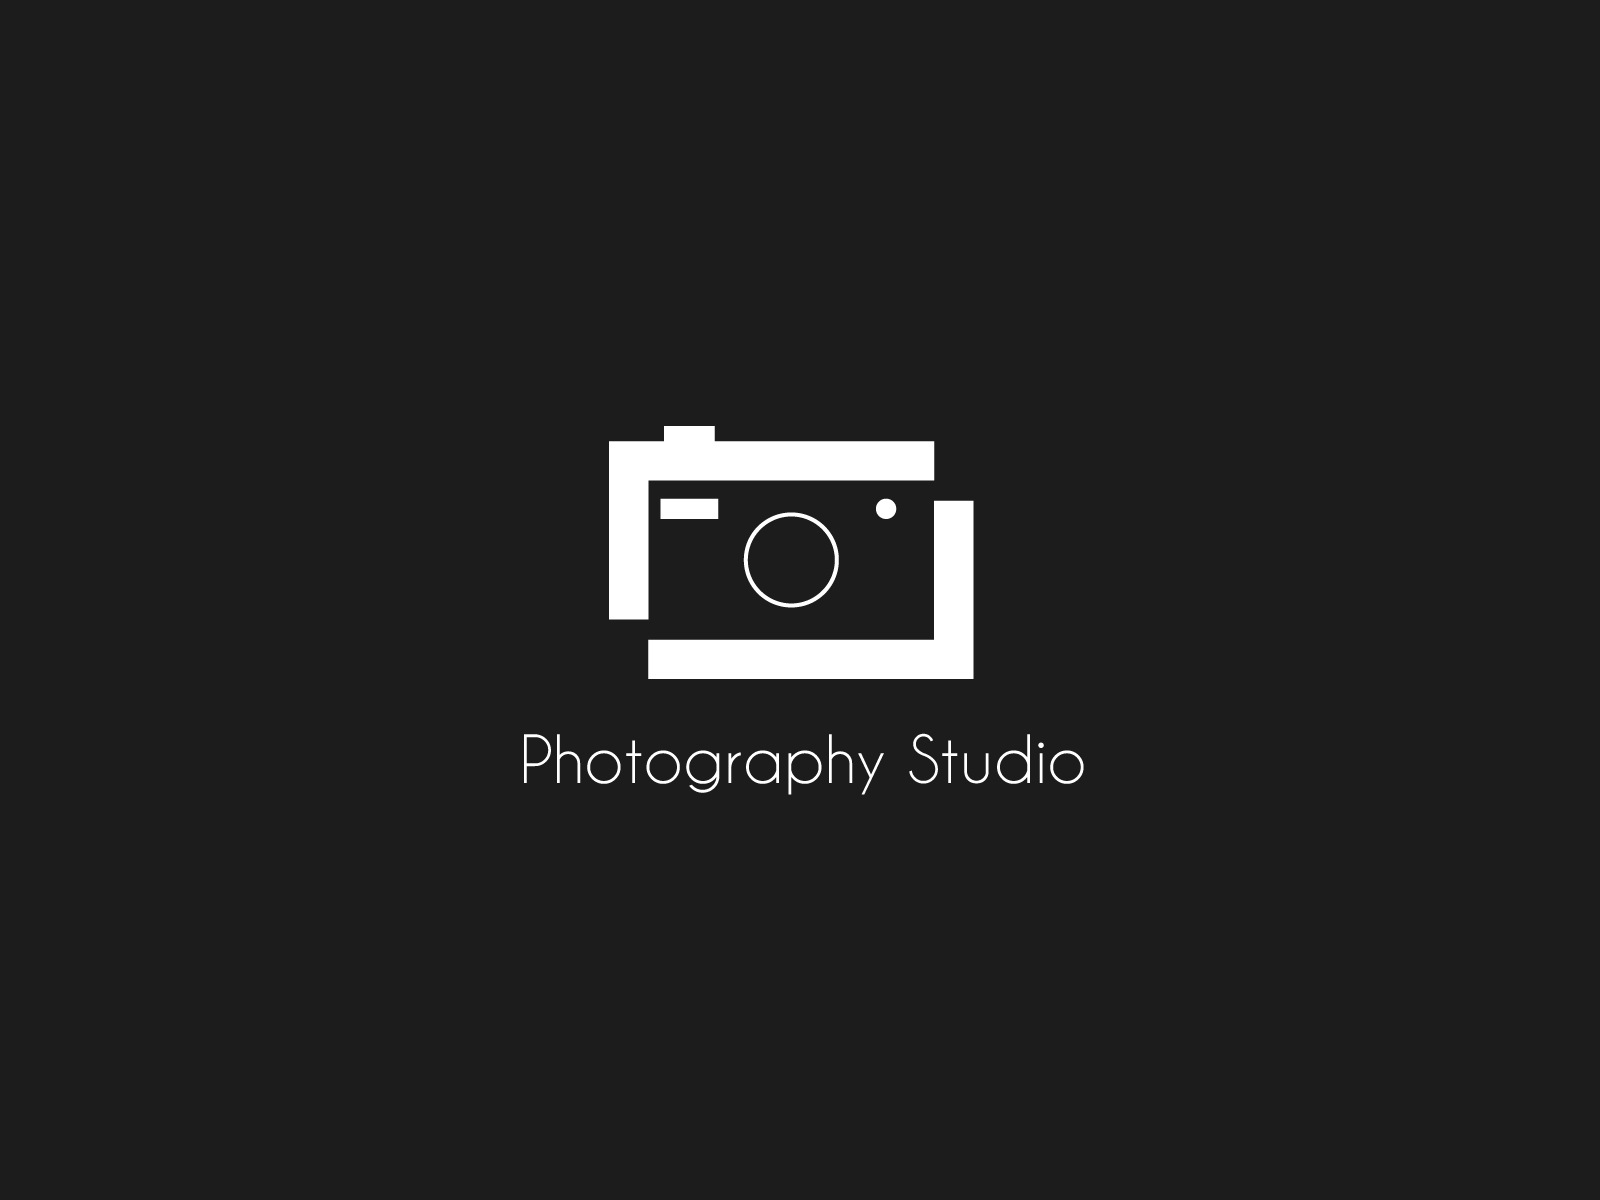 Photography studio logo by Ba2_Design on Dribbble